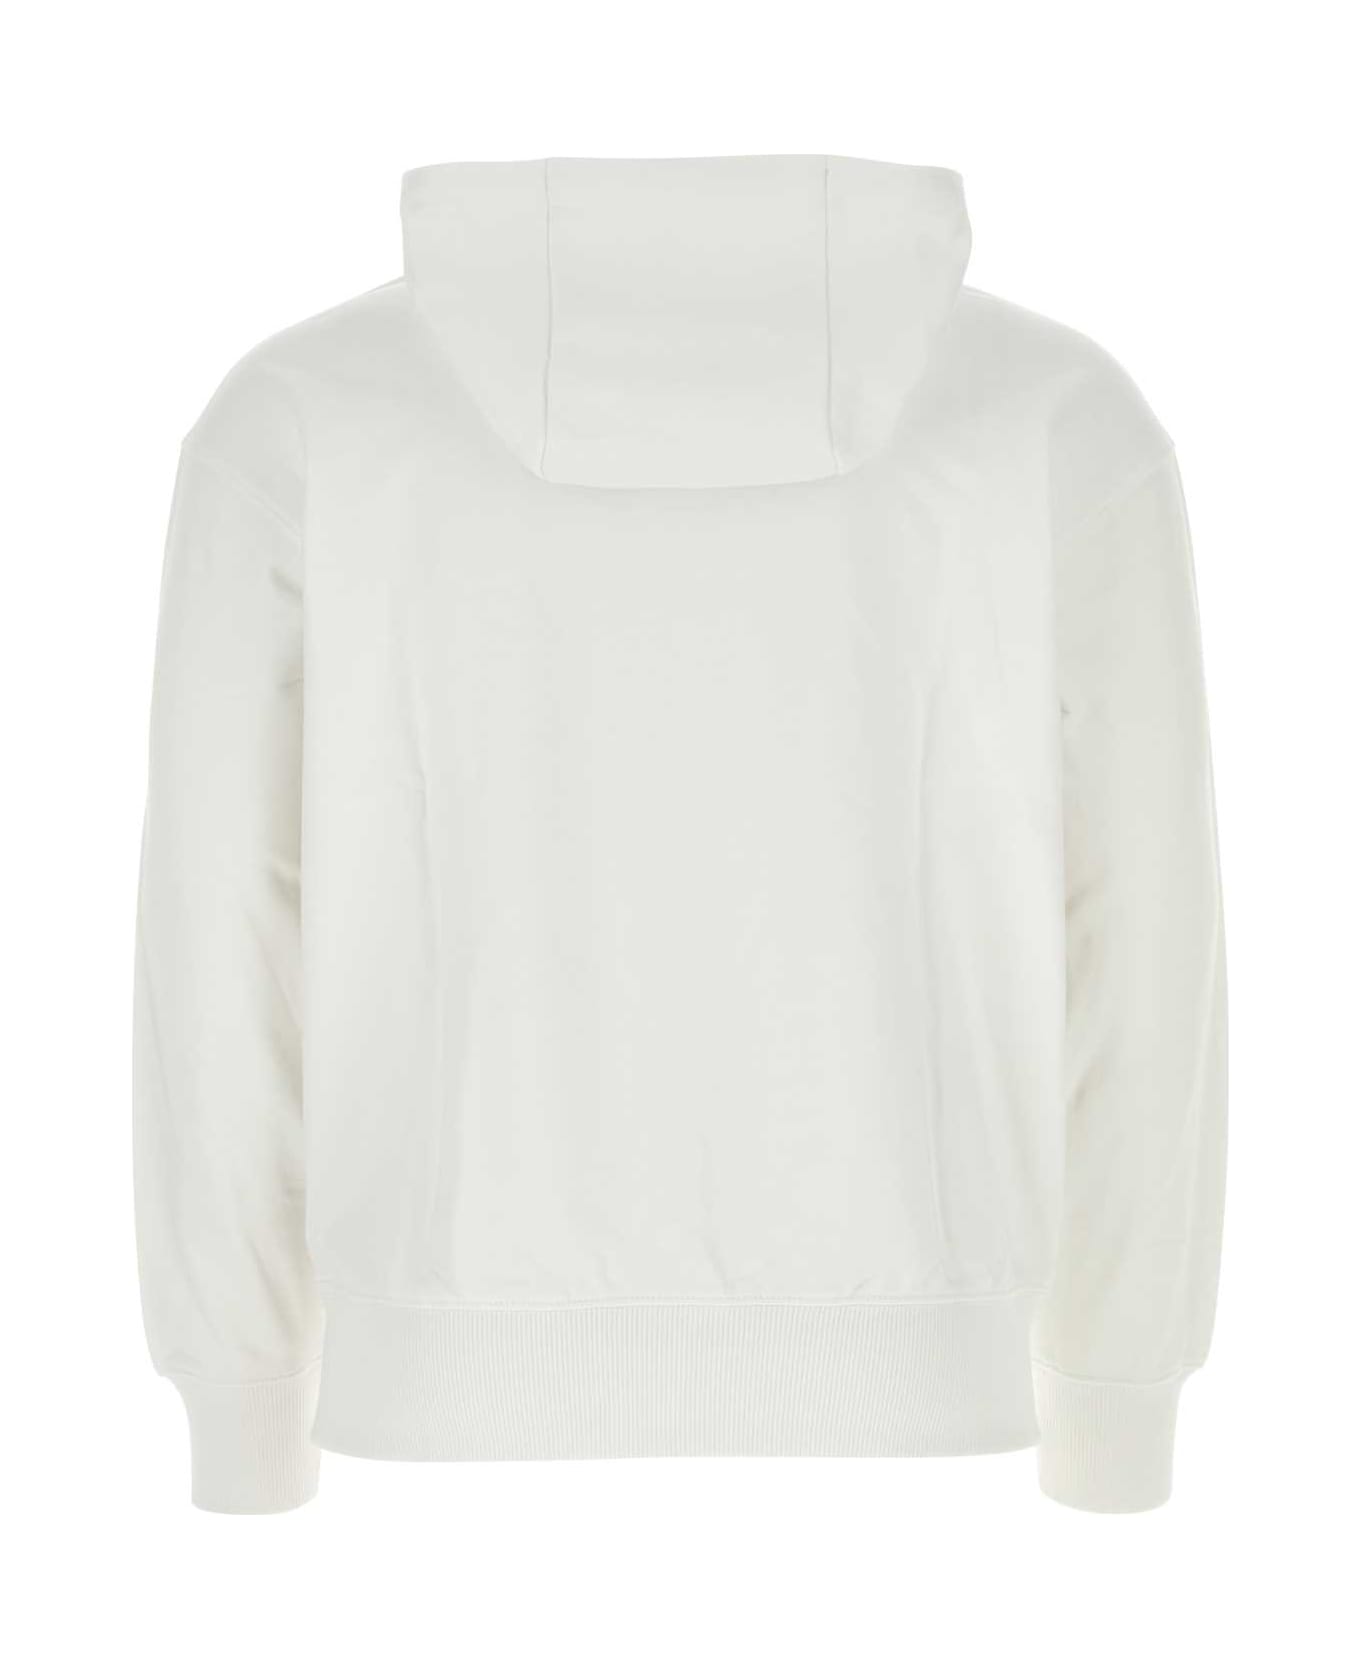 Hugo Boss White Cotton Sweatshirt - White